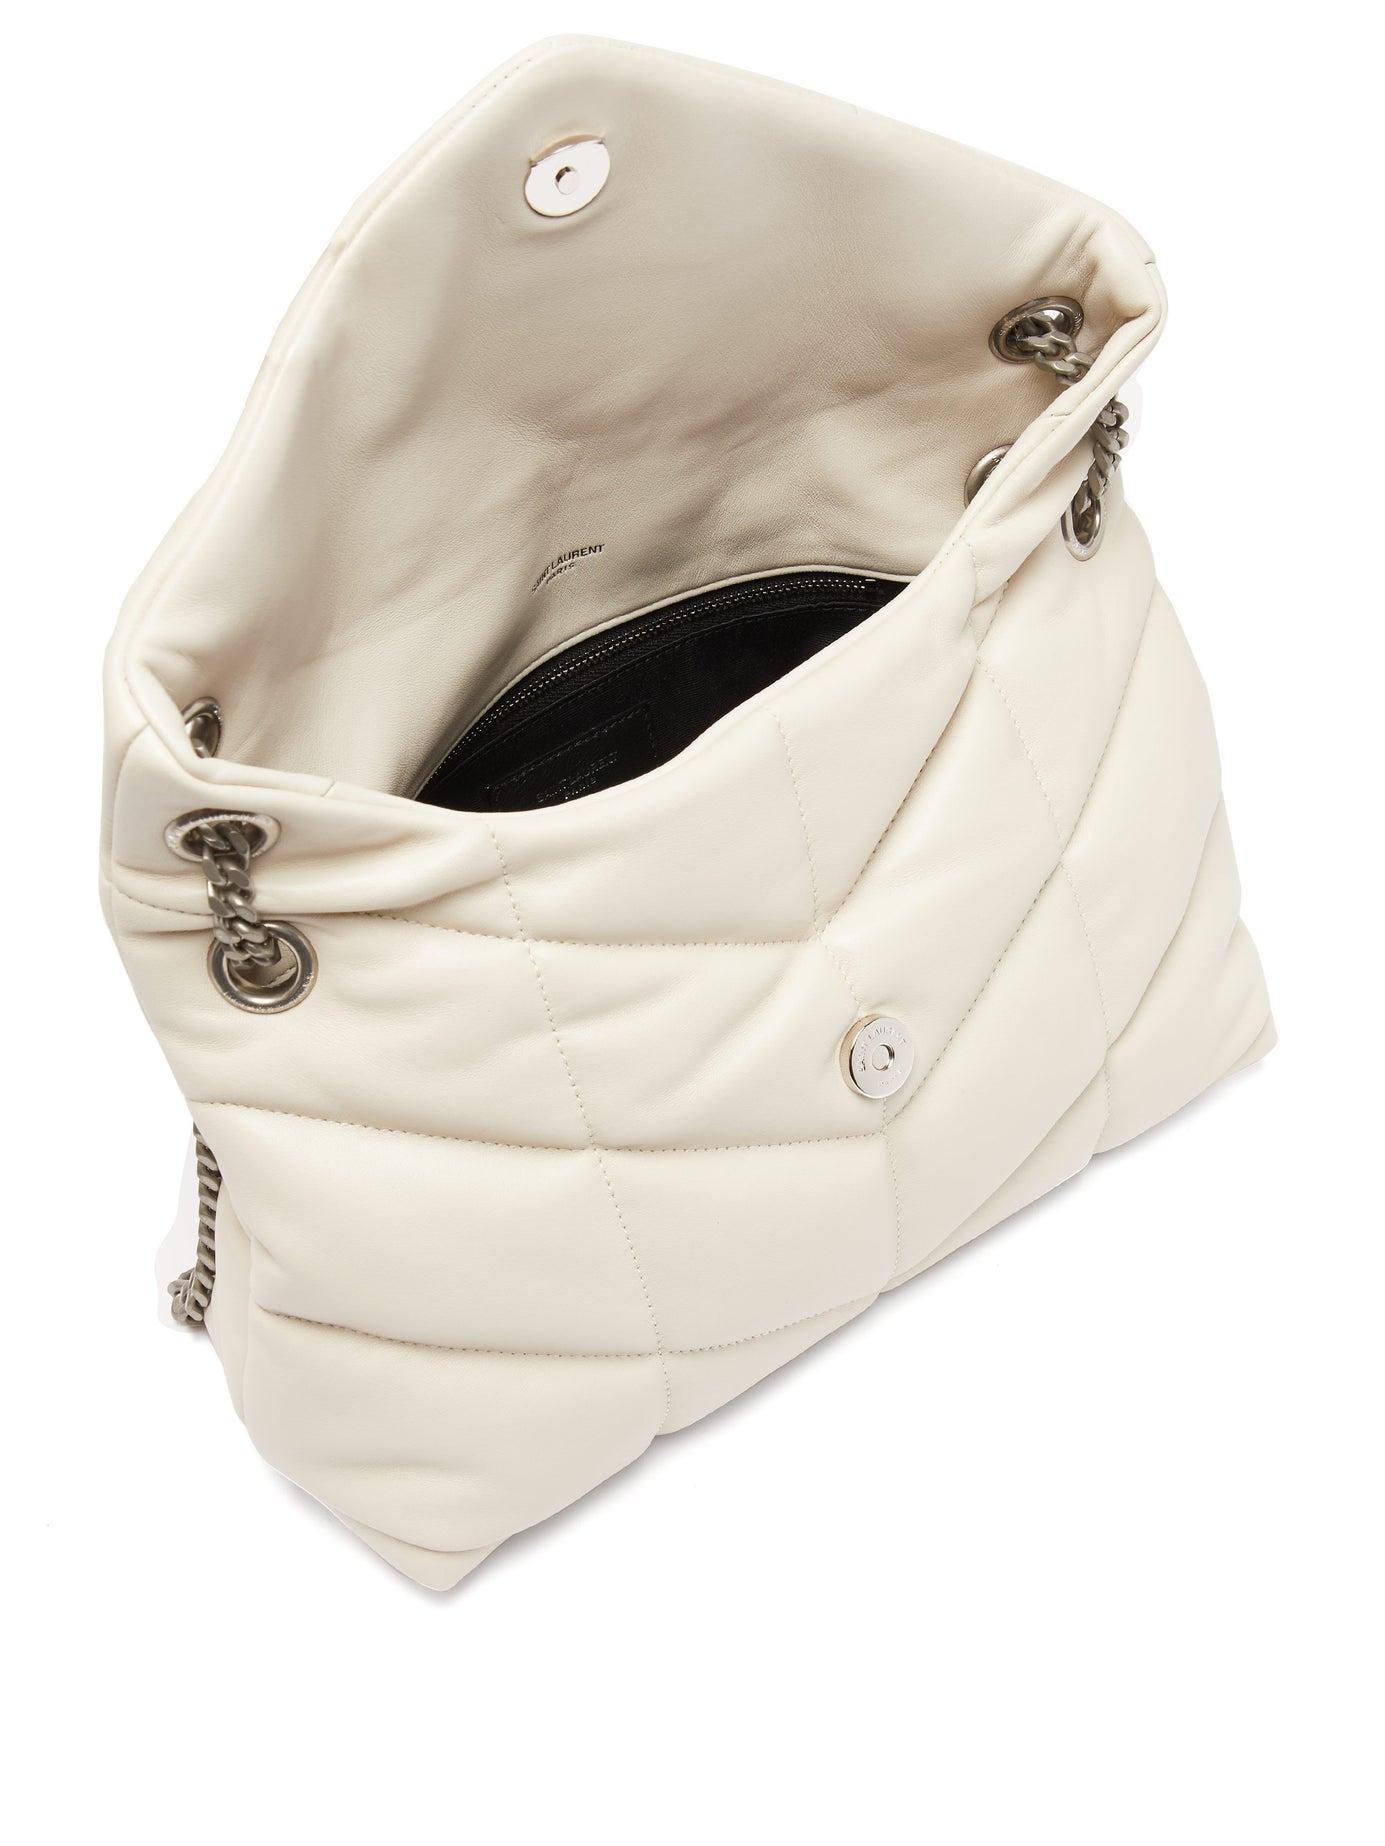 Saint Laurent - Authenticated Loulou Puffer Handbag - Leather White Plain for Women, Never Worn